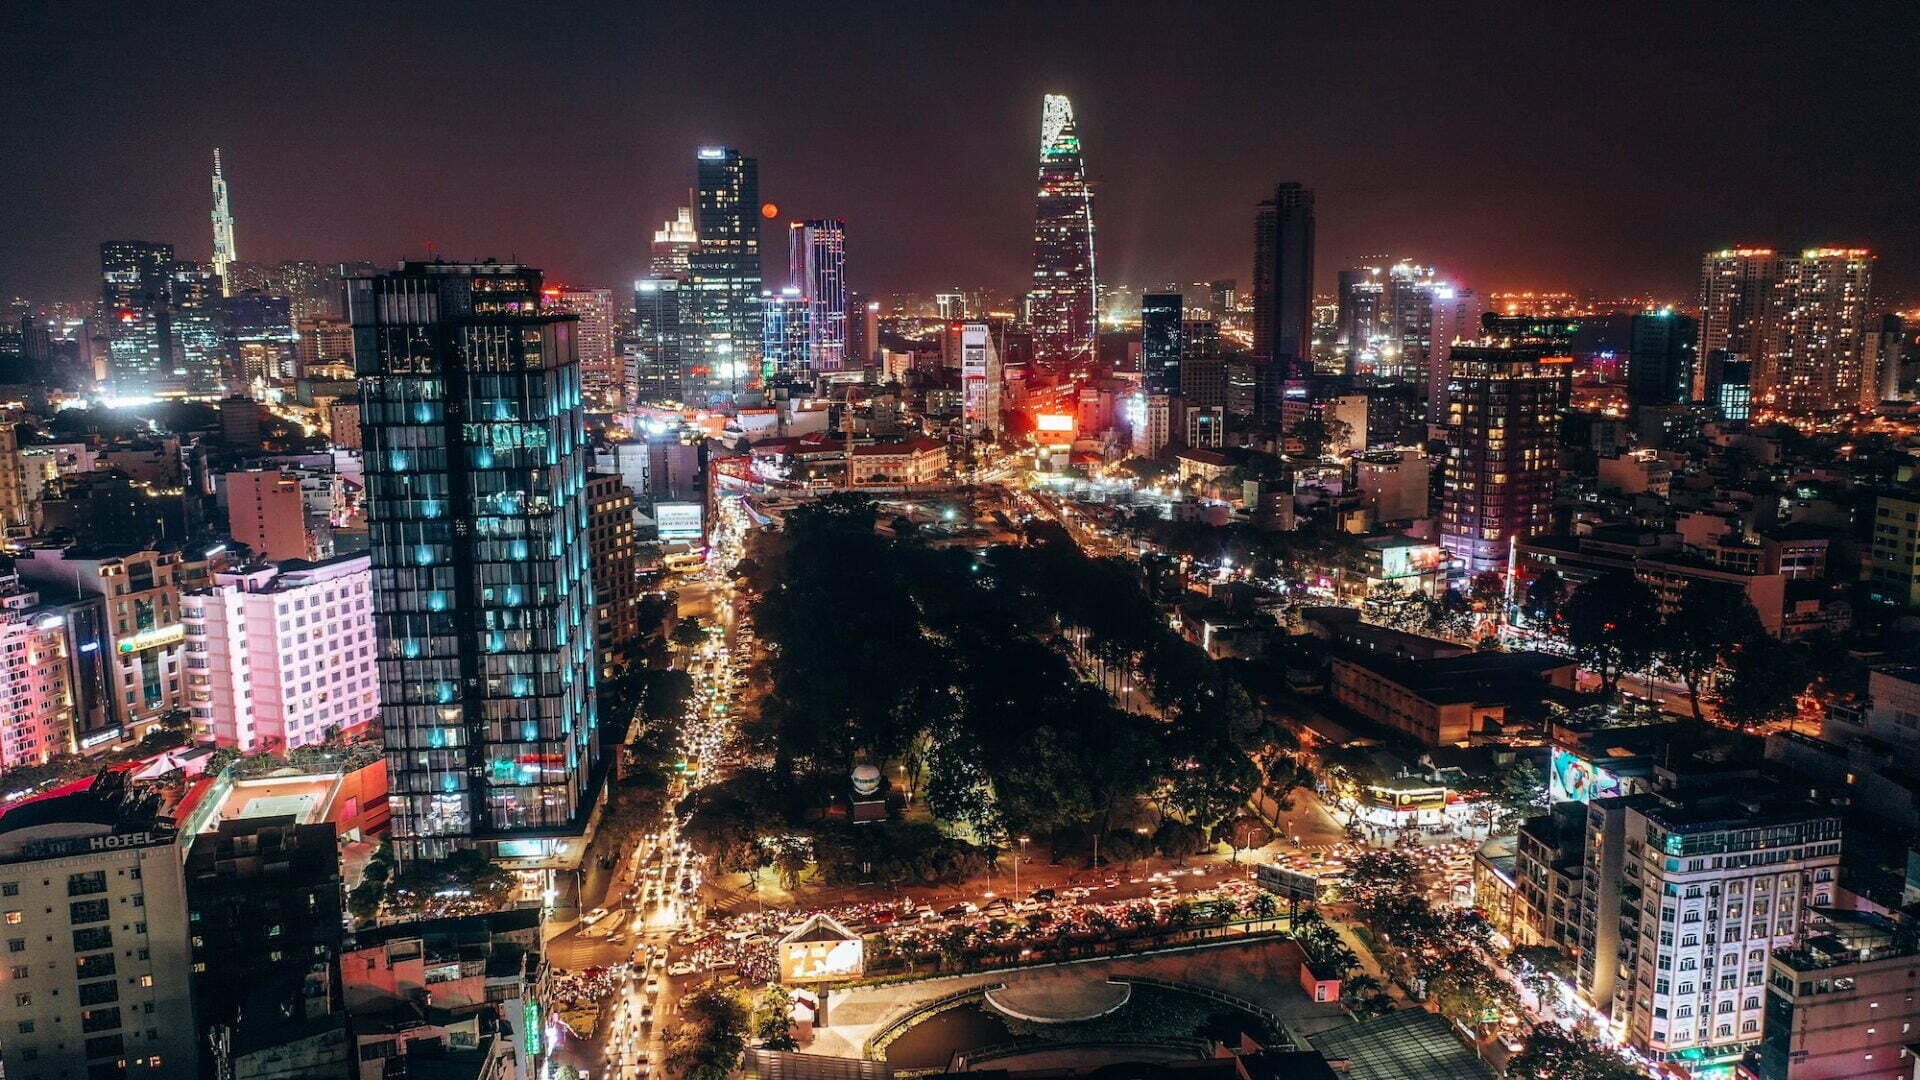 Kehidupan malam di Skyline Bandar Ho Chi Min (saigon).